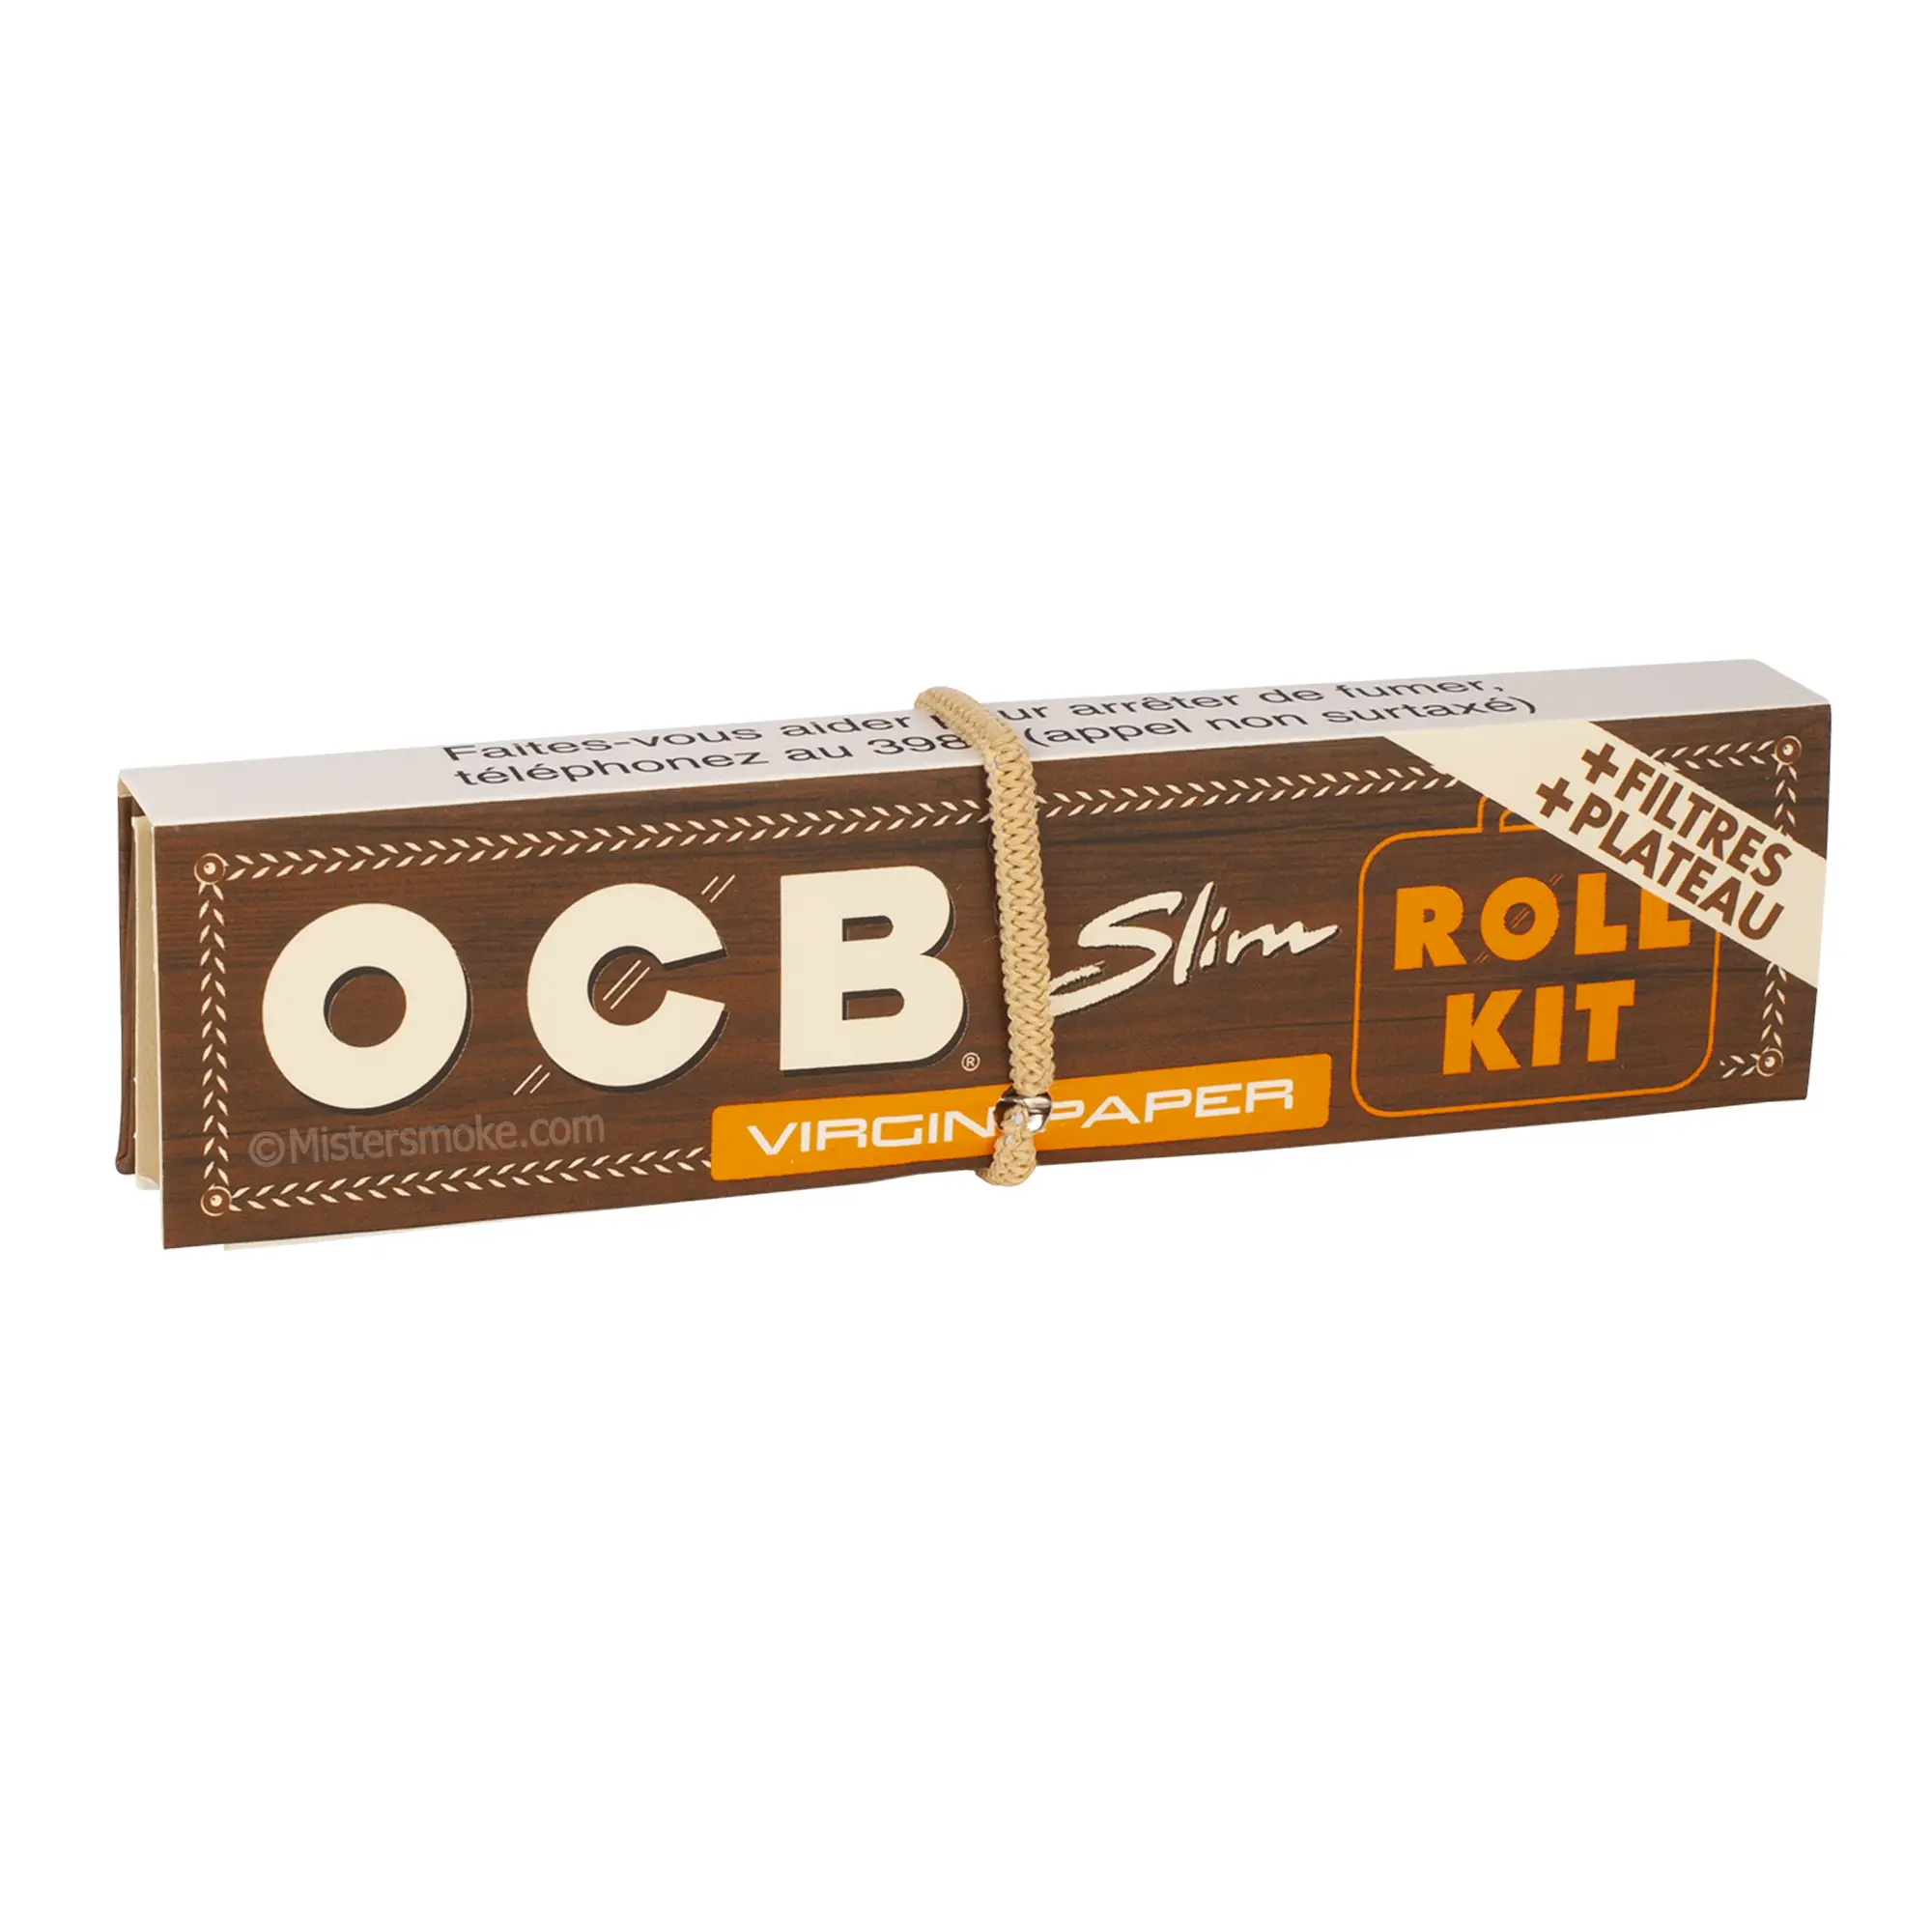 Carnet OCB Slim Virgin - Roll kit - Feuilles slim + tips - Mistersmoke